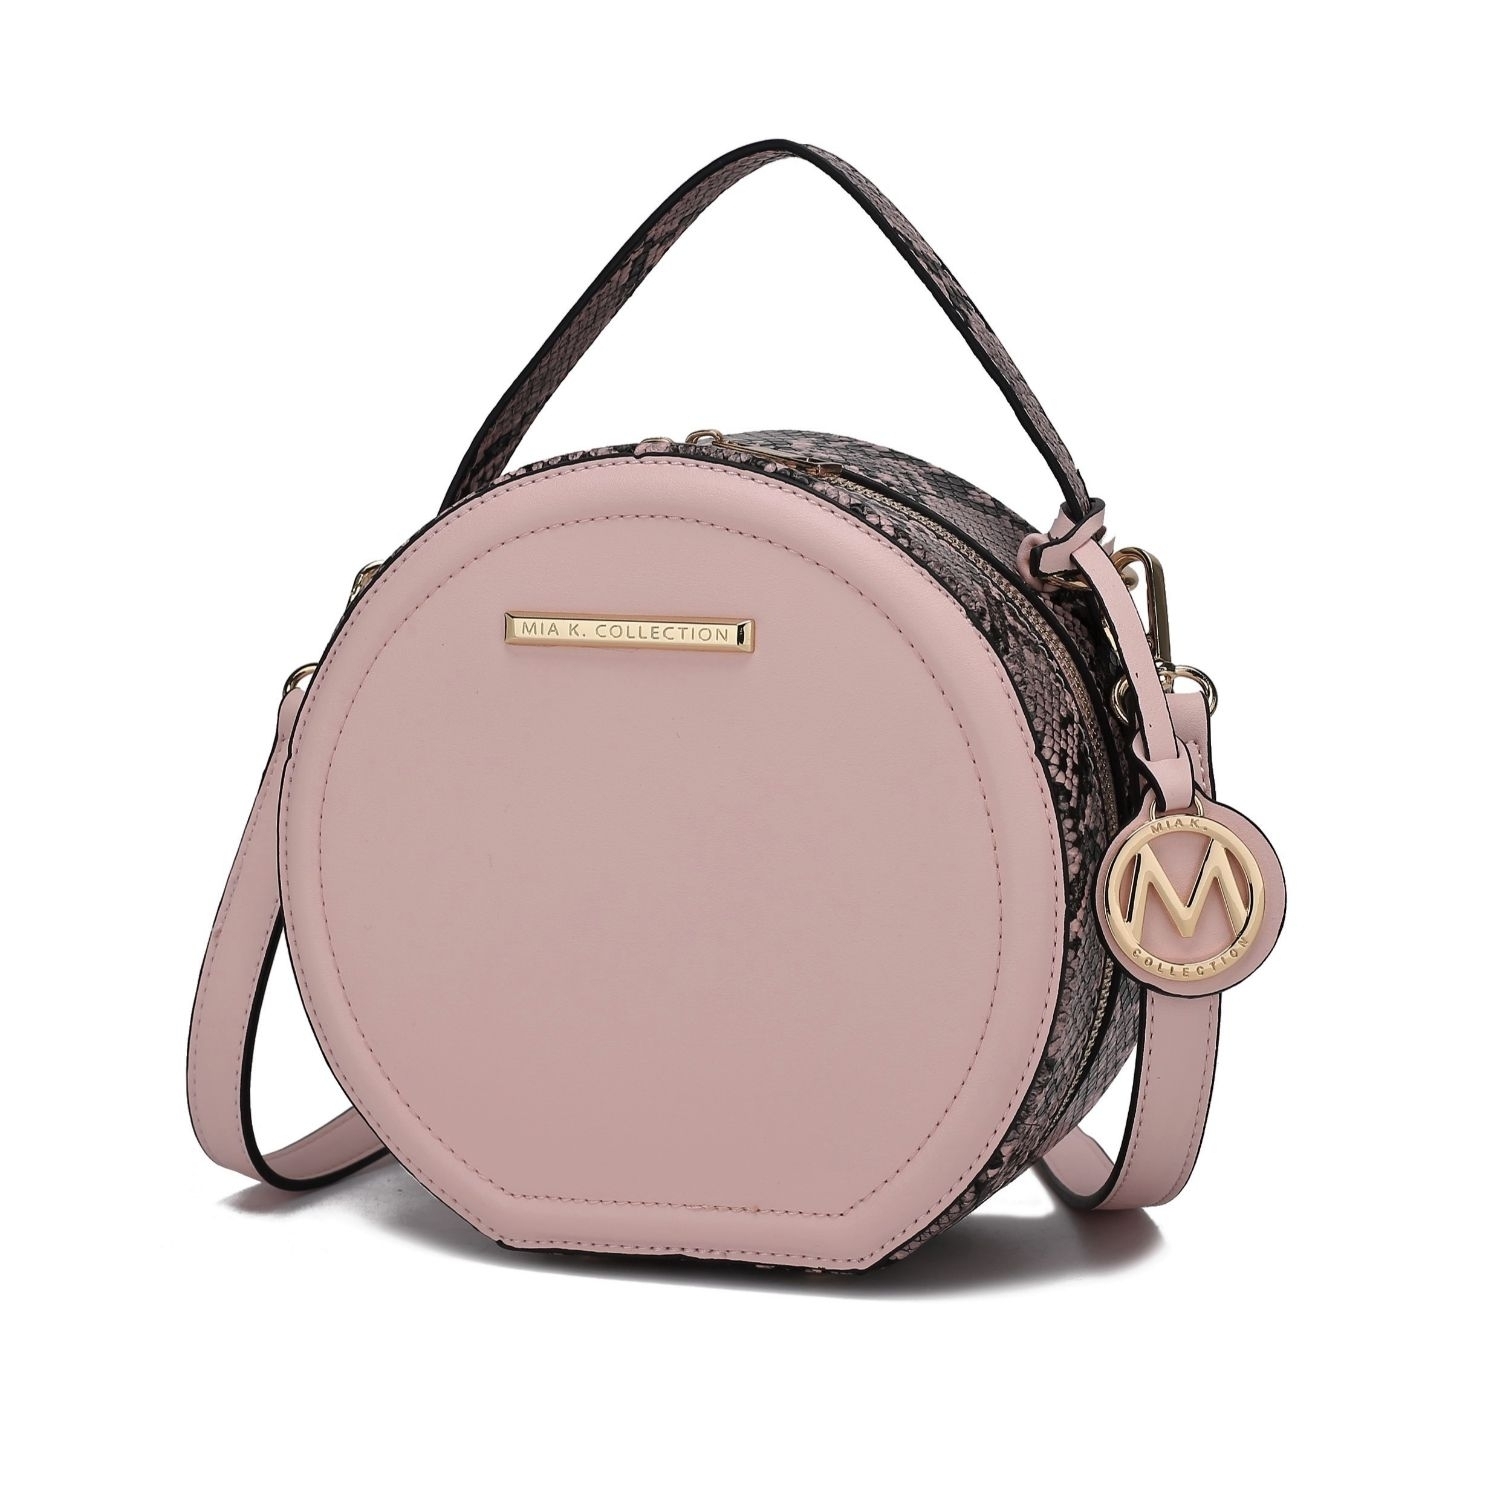 MKF Collection Mallory Handbag Crossbody By Mia K. - Light Pink